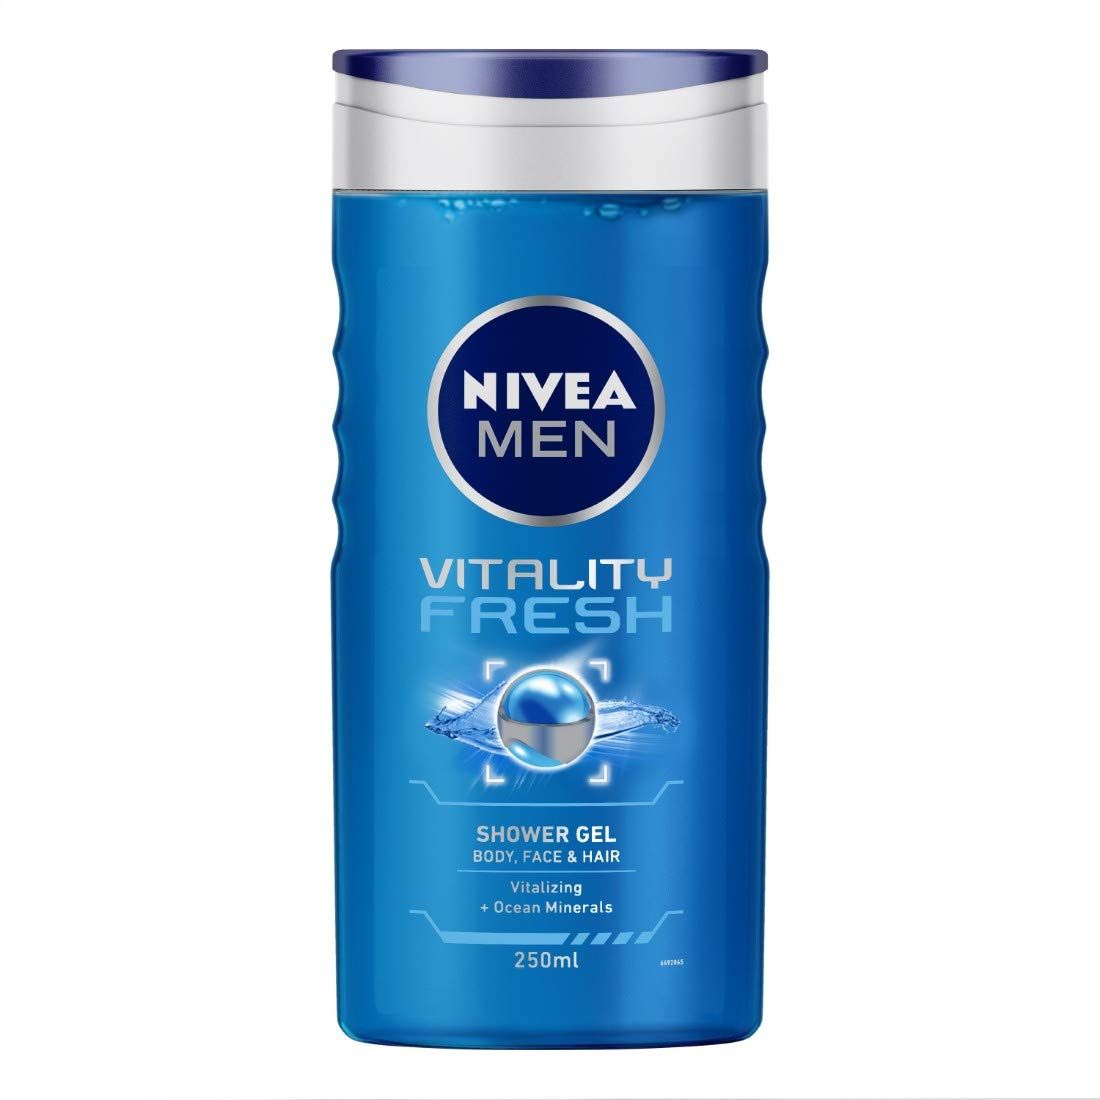 Nivea Men Vitality Fresh Shower Gel (250ml) - Niram